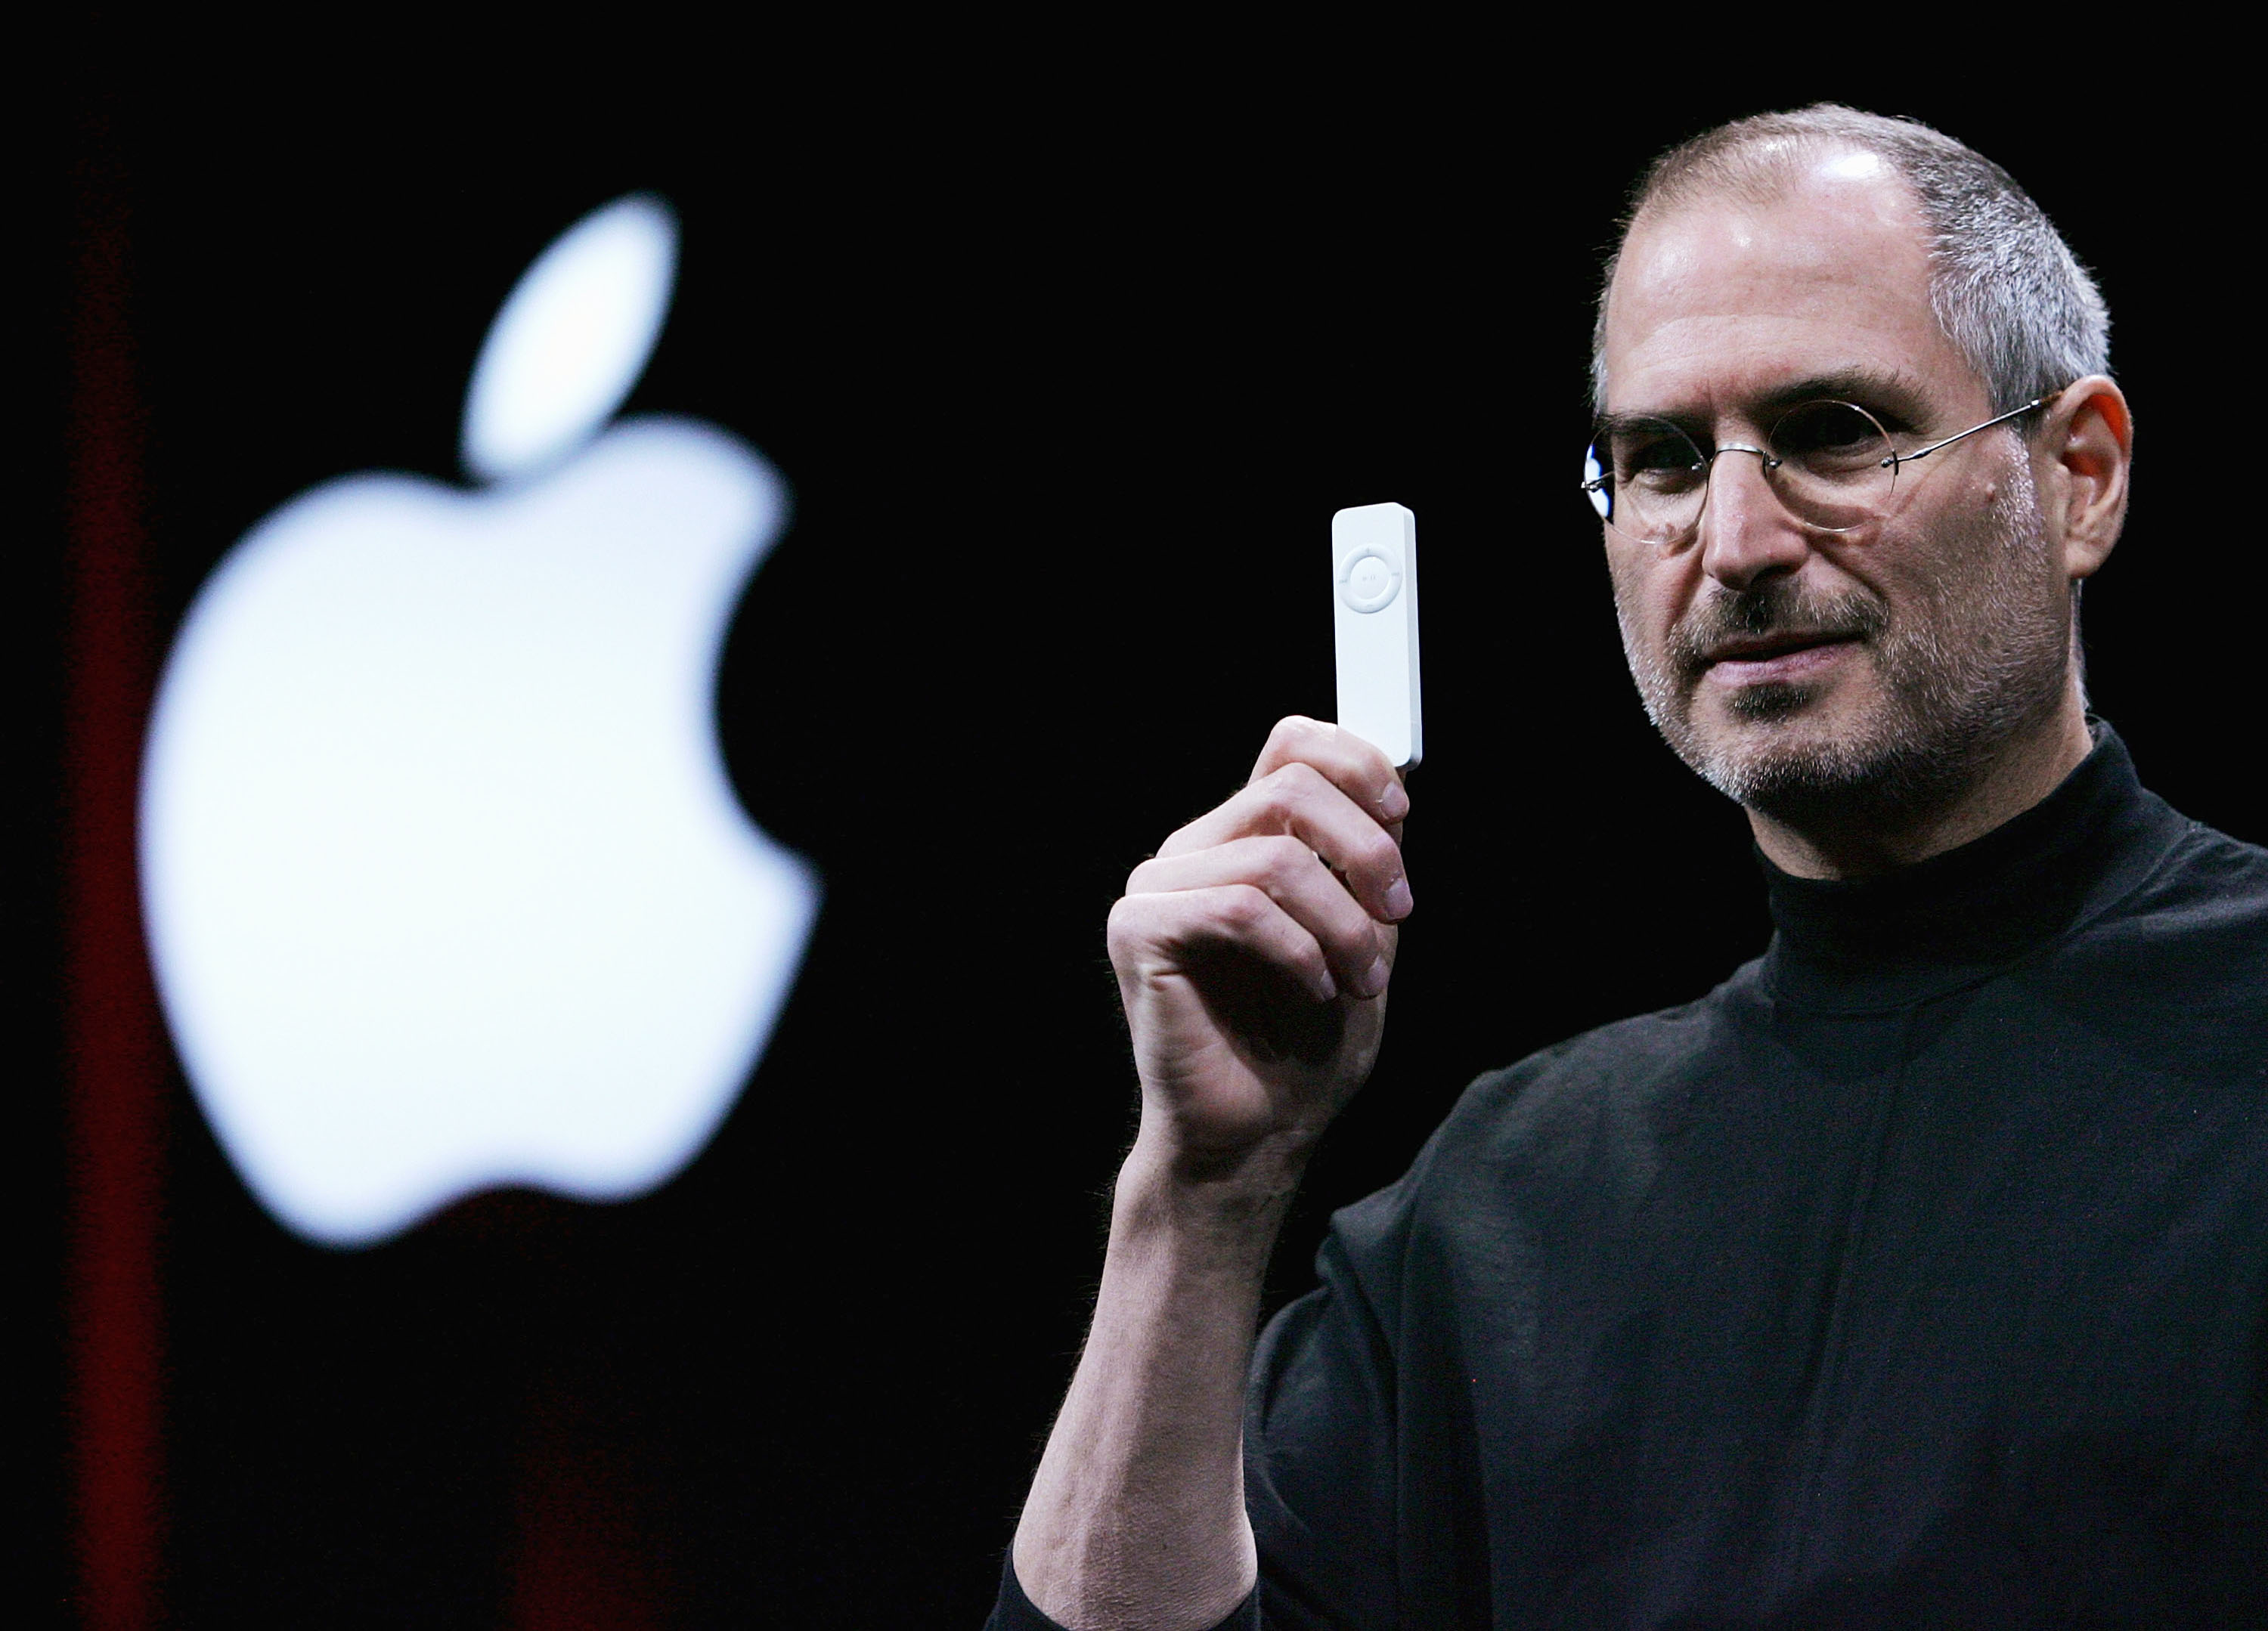 Apple CEO Steve Jobs Delivers Opening Keynote At Macworld